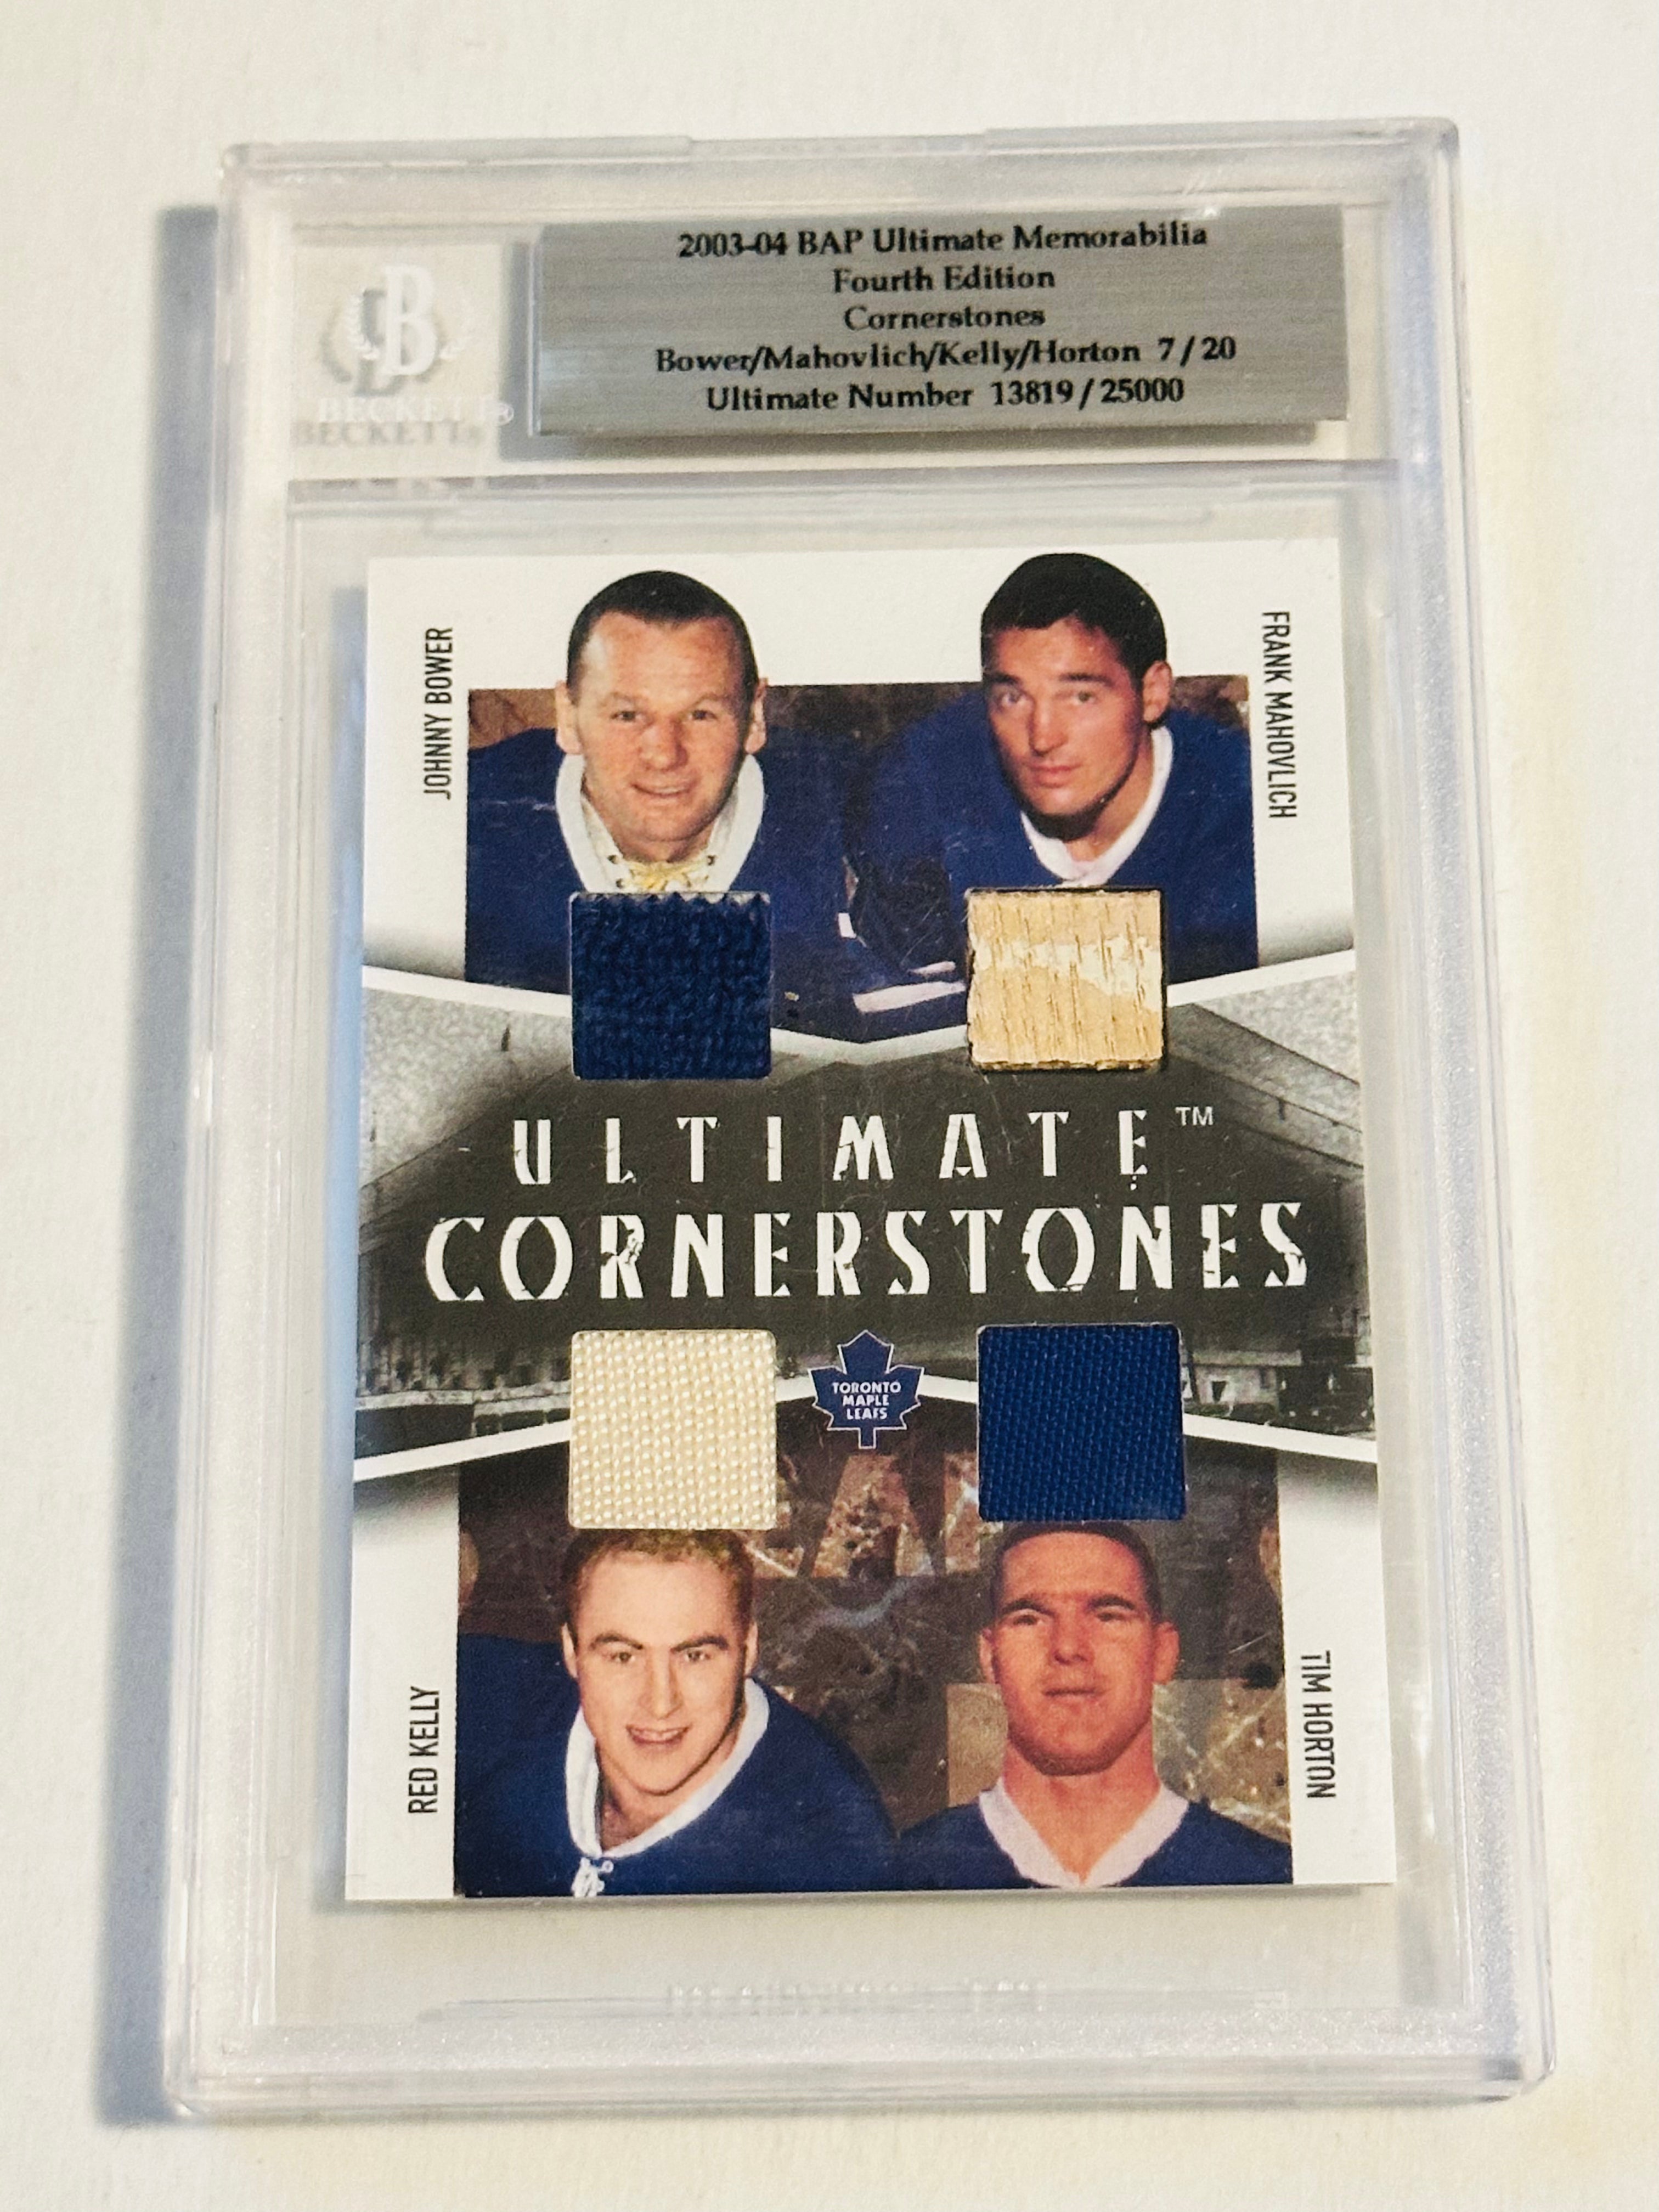 Toronto Maple Leafs hockey legends rare quad memorabilia hockey insert card ; Tim Horton and more…